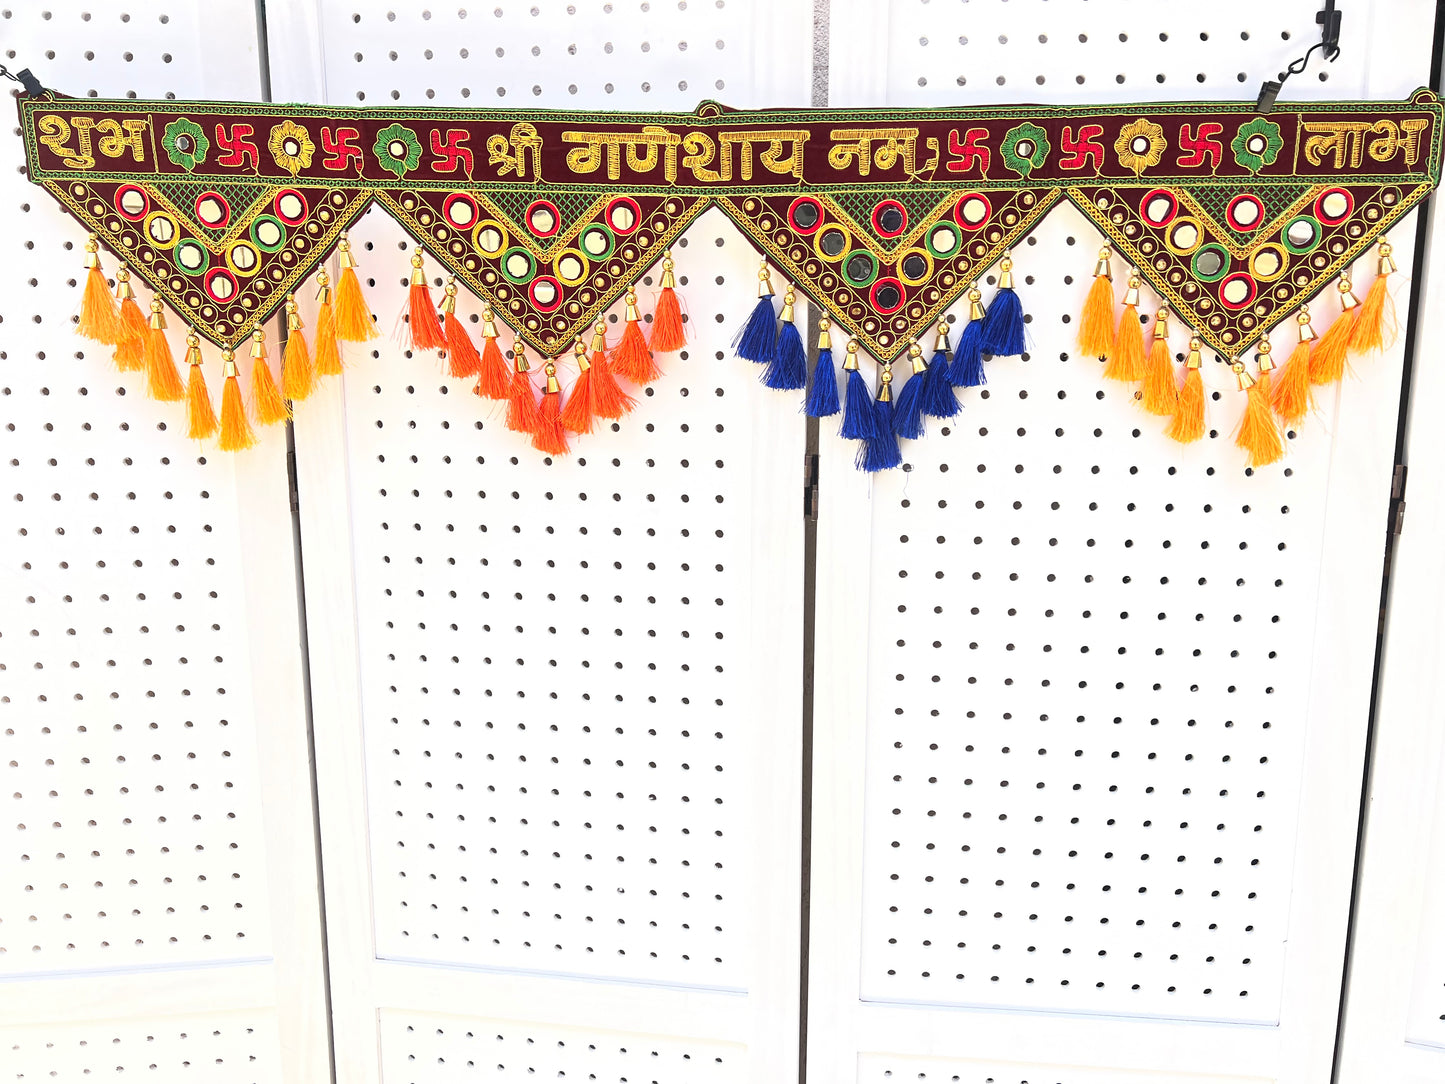 Shubh Labh Ganesha Toran Bandanwar Door Wall Cloth Hanging Traditional Indian Home Office Temple Pooja Deepawali Festival Decor Decoration Gifting